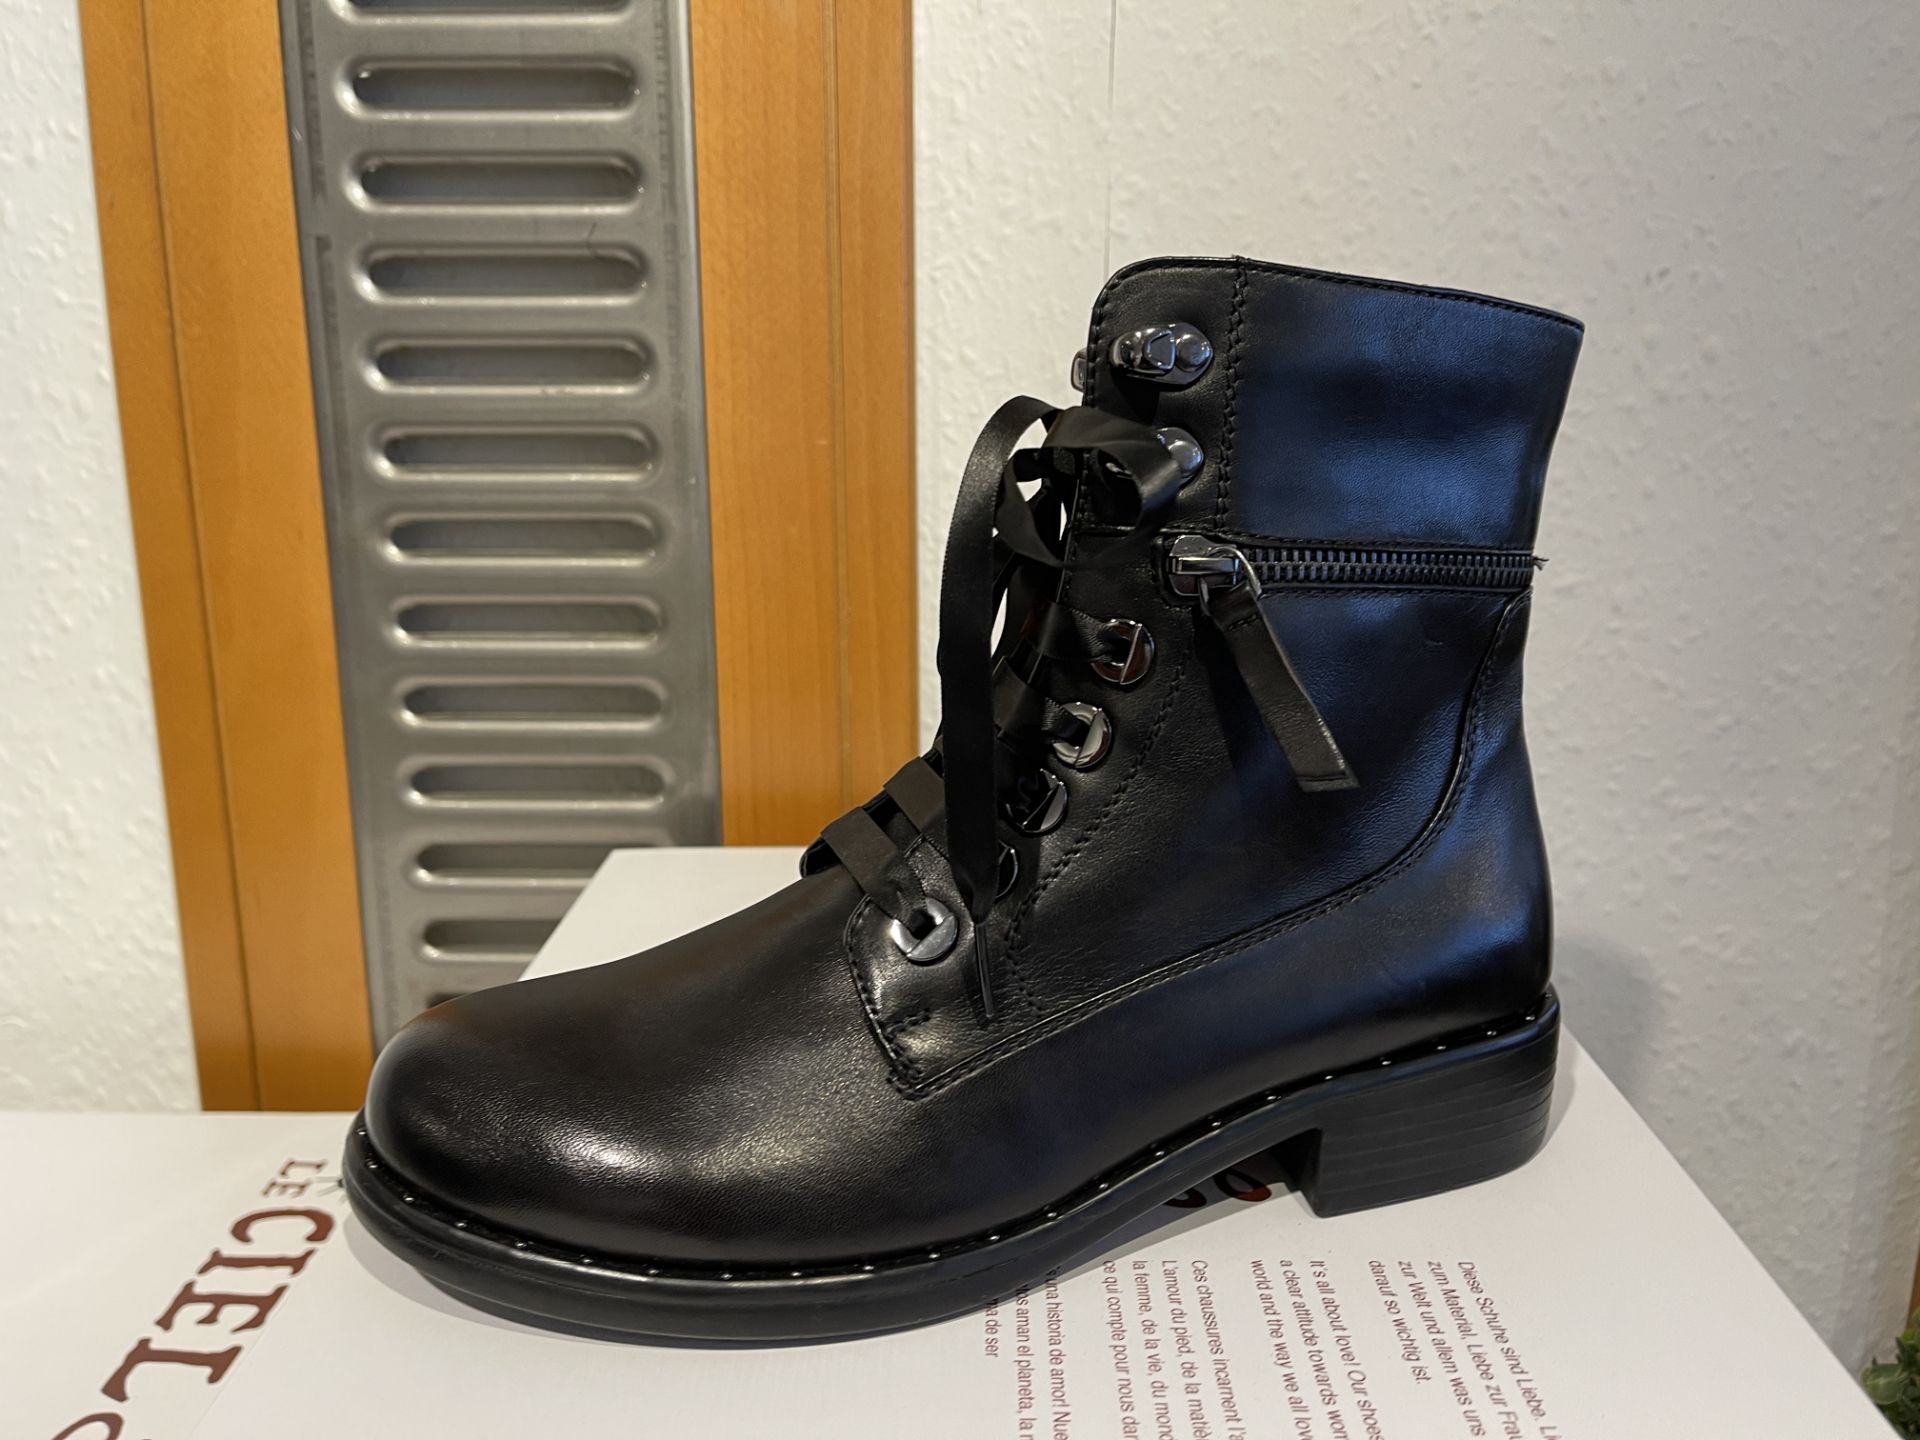 Regarde Ciel 5 Pairs: Delice Black Boots Roxana-04 Var. 2695Sizes 37, 38, 39 & 41 (RRP £110) Regarde